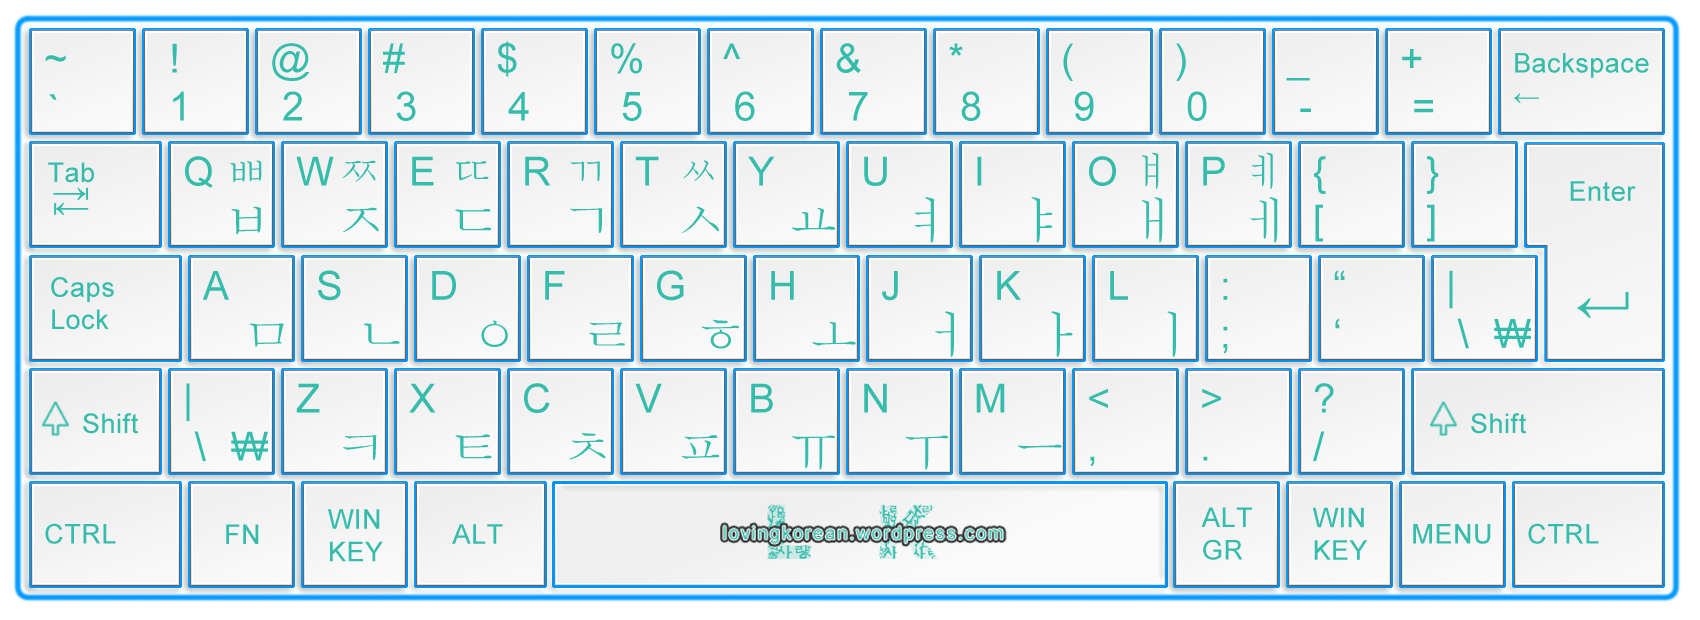 hangul keyboard layout